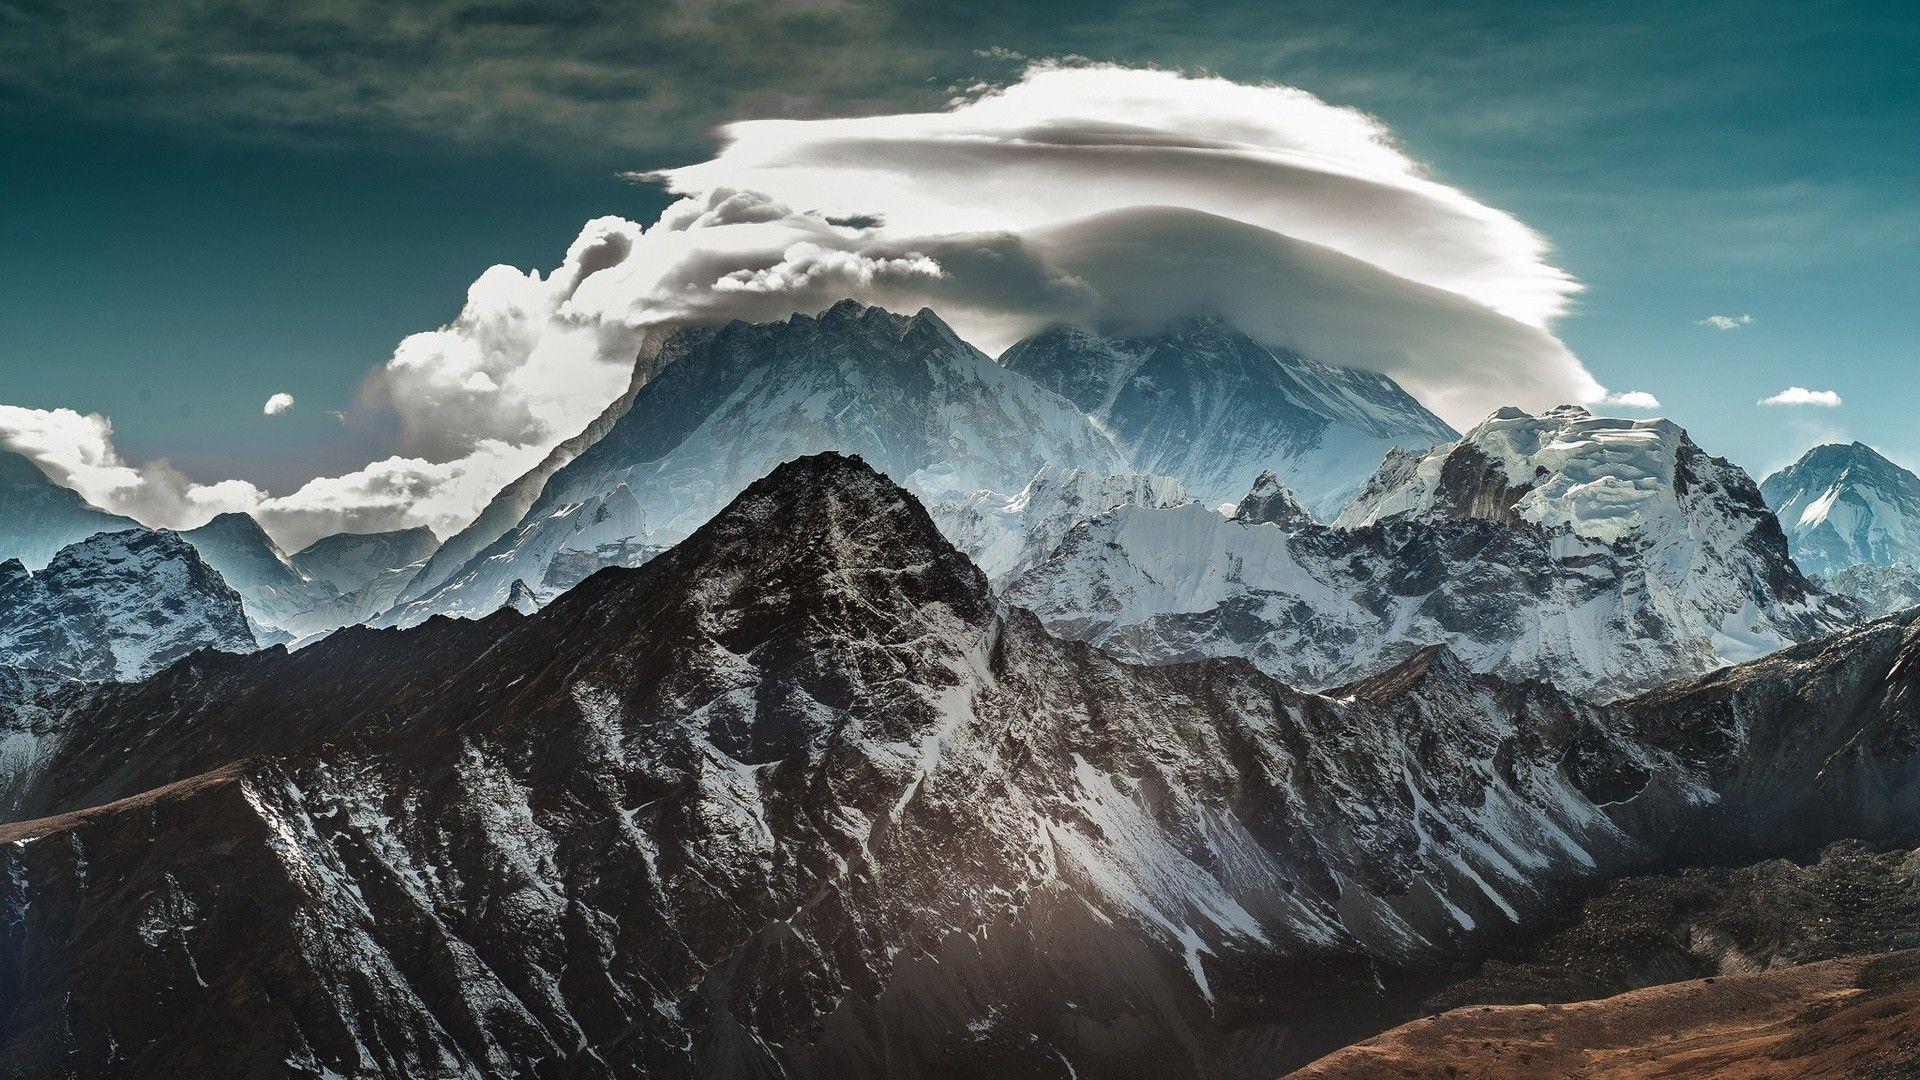 himalaya. Mountain picture, Mountain wallpaper, Mountain image